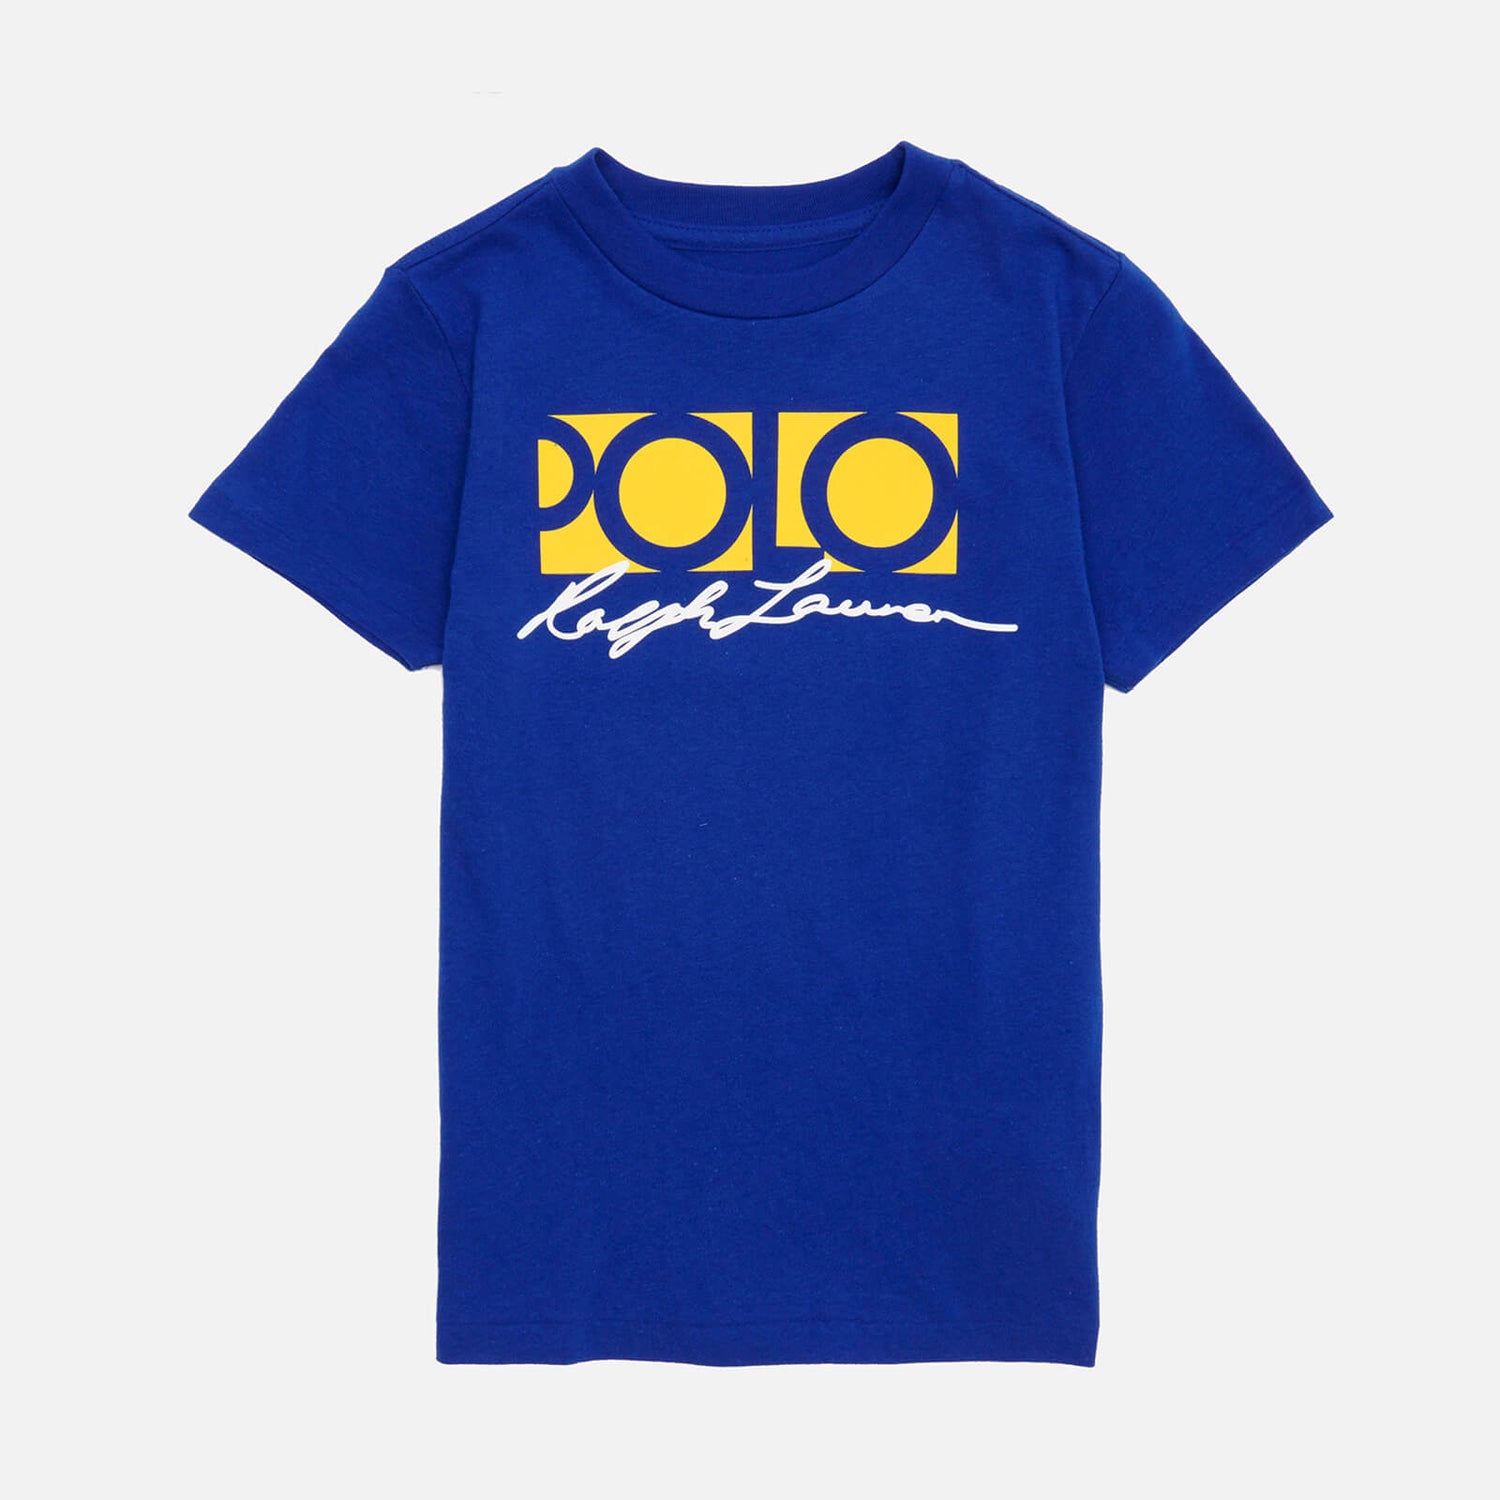 Polo Ralph Lauren Boys' Short Sleeve Logo T-Shirt - Active Royal